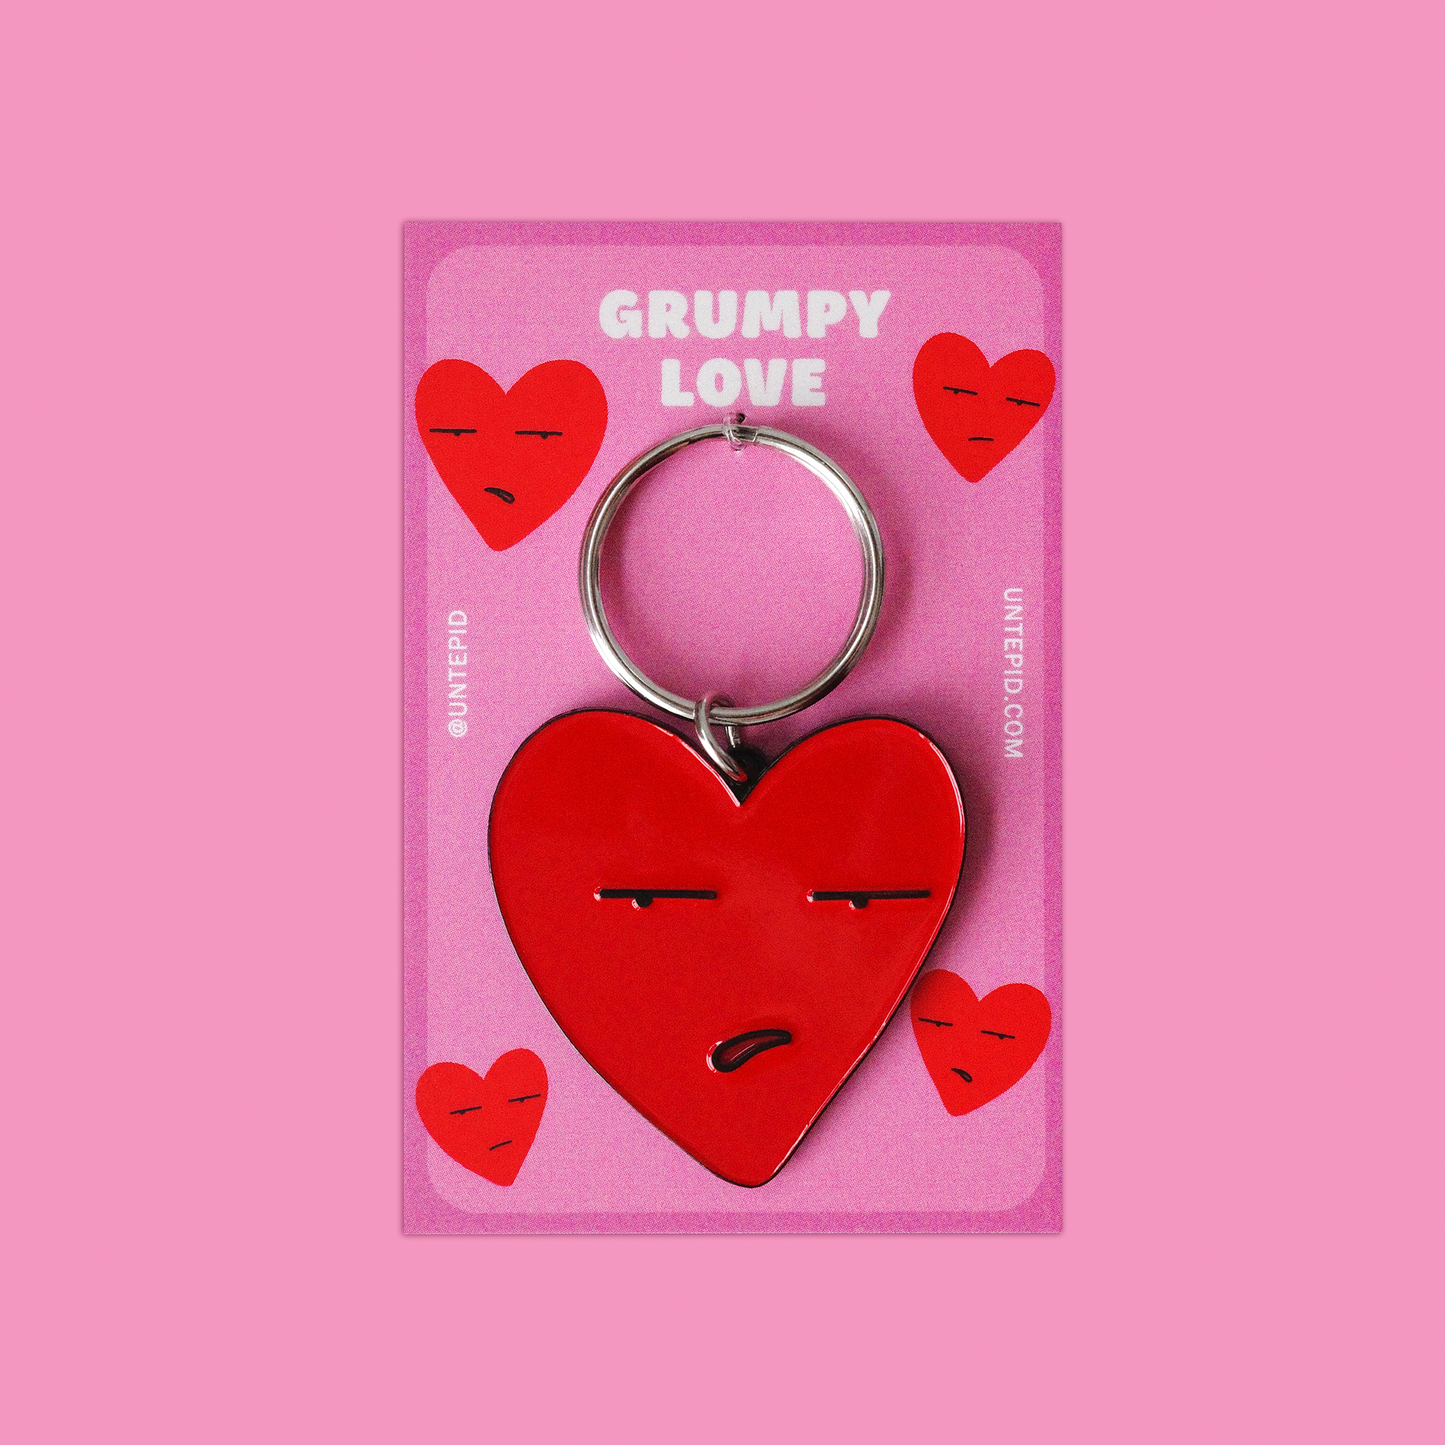 Grumpy Heart keychain